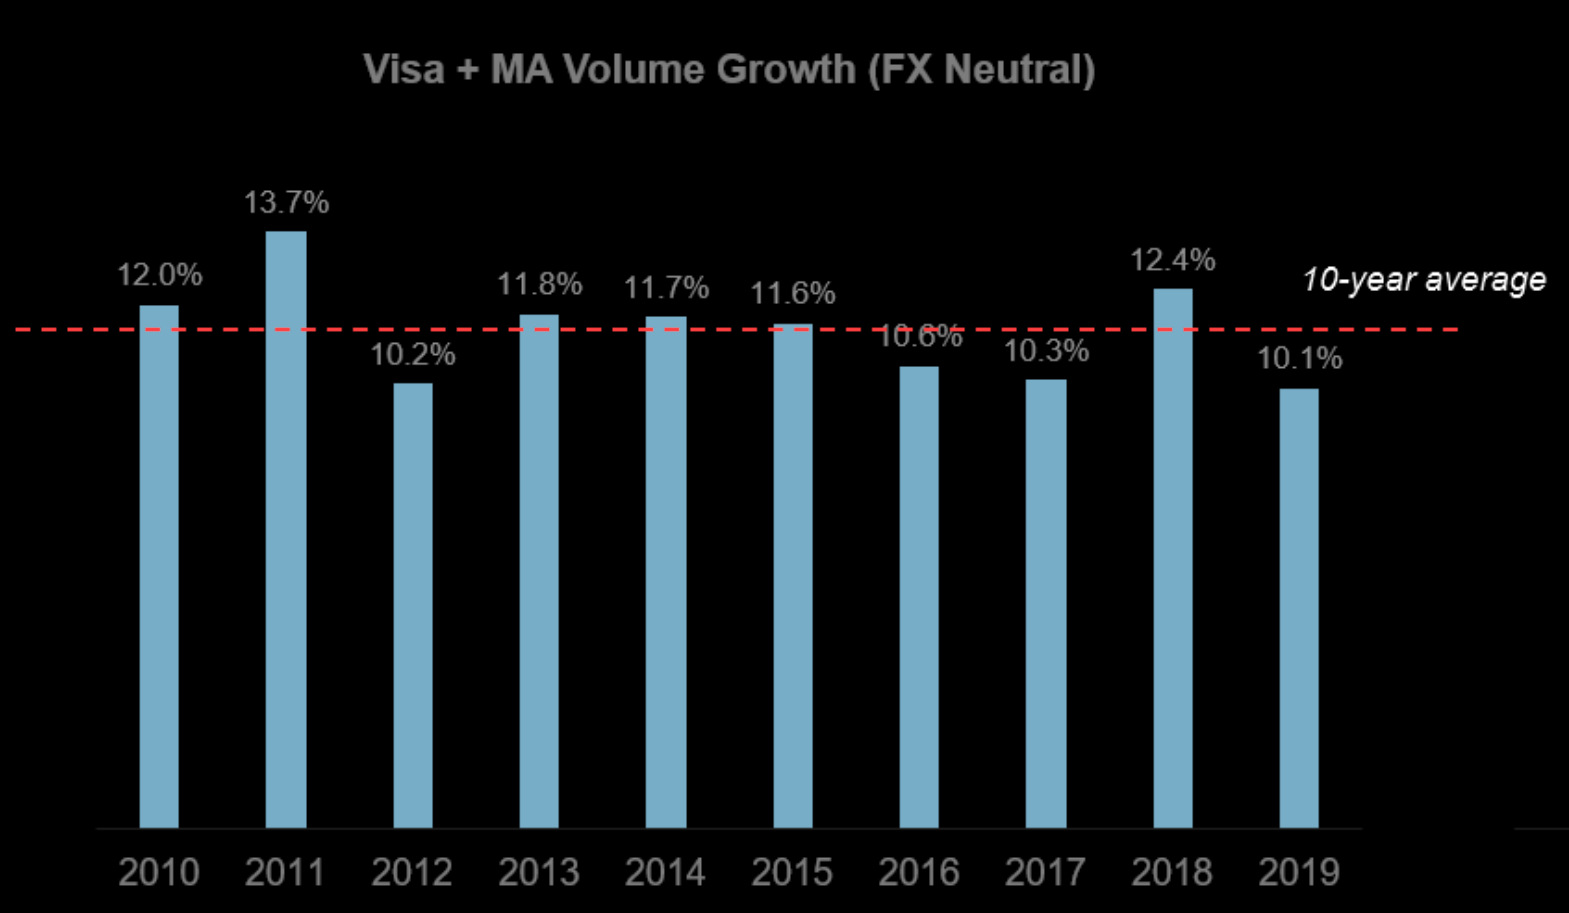 Visa and Mastercard volume growth is like clockwork